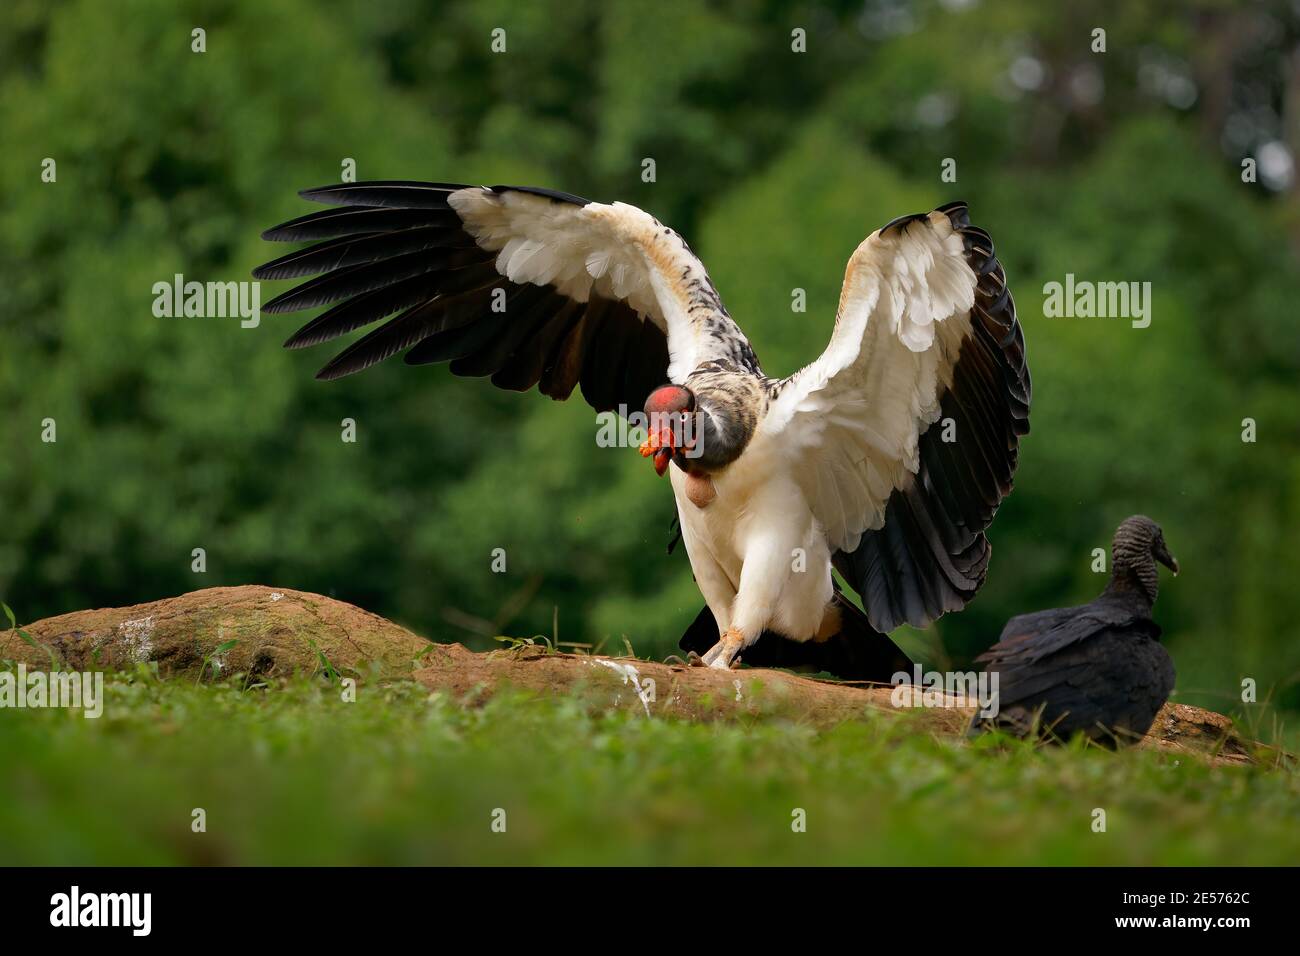 King Vulture - Sarcoramphus papa big bird of prey,  New World vulture family Cathartidae, black and white body, red, orange head, beak and throat. Wid Stock Photo